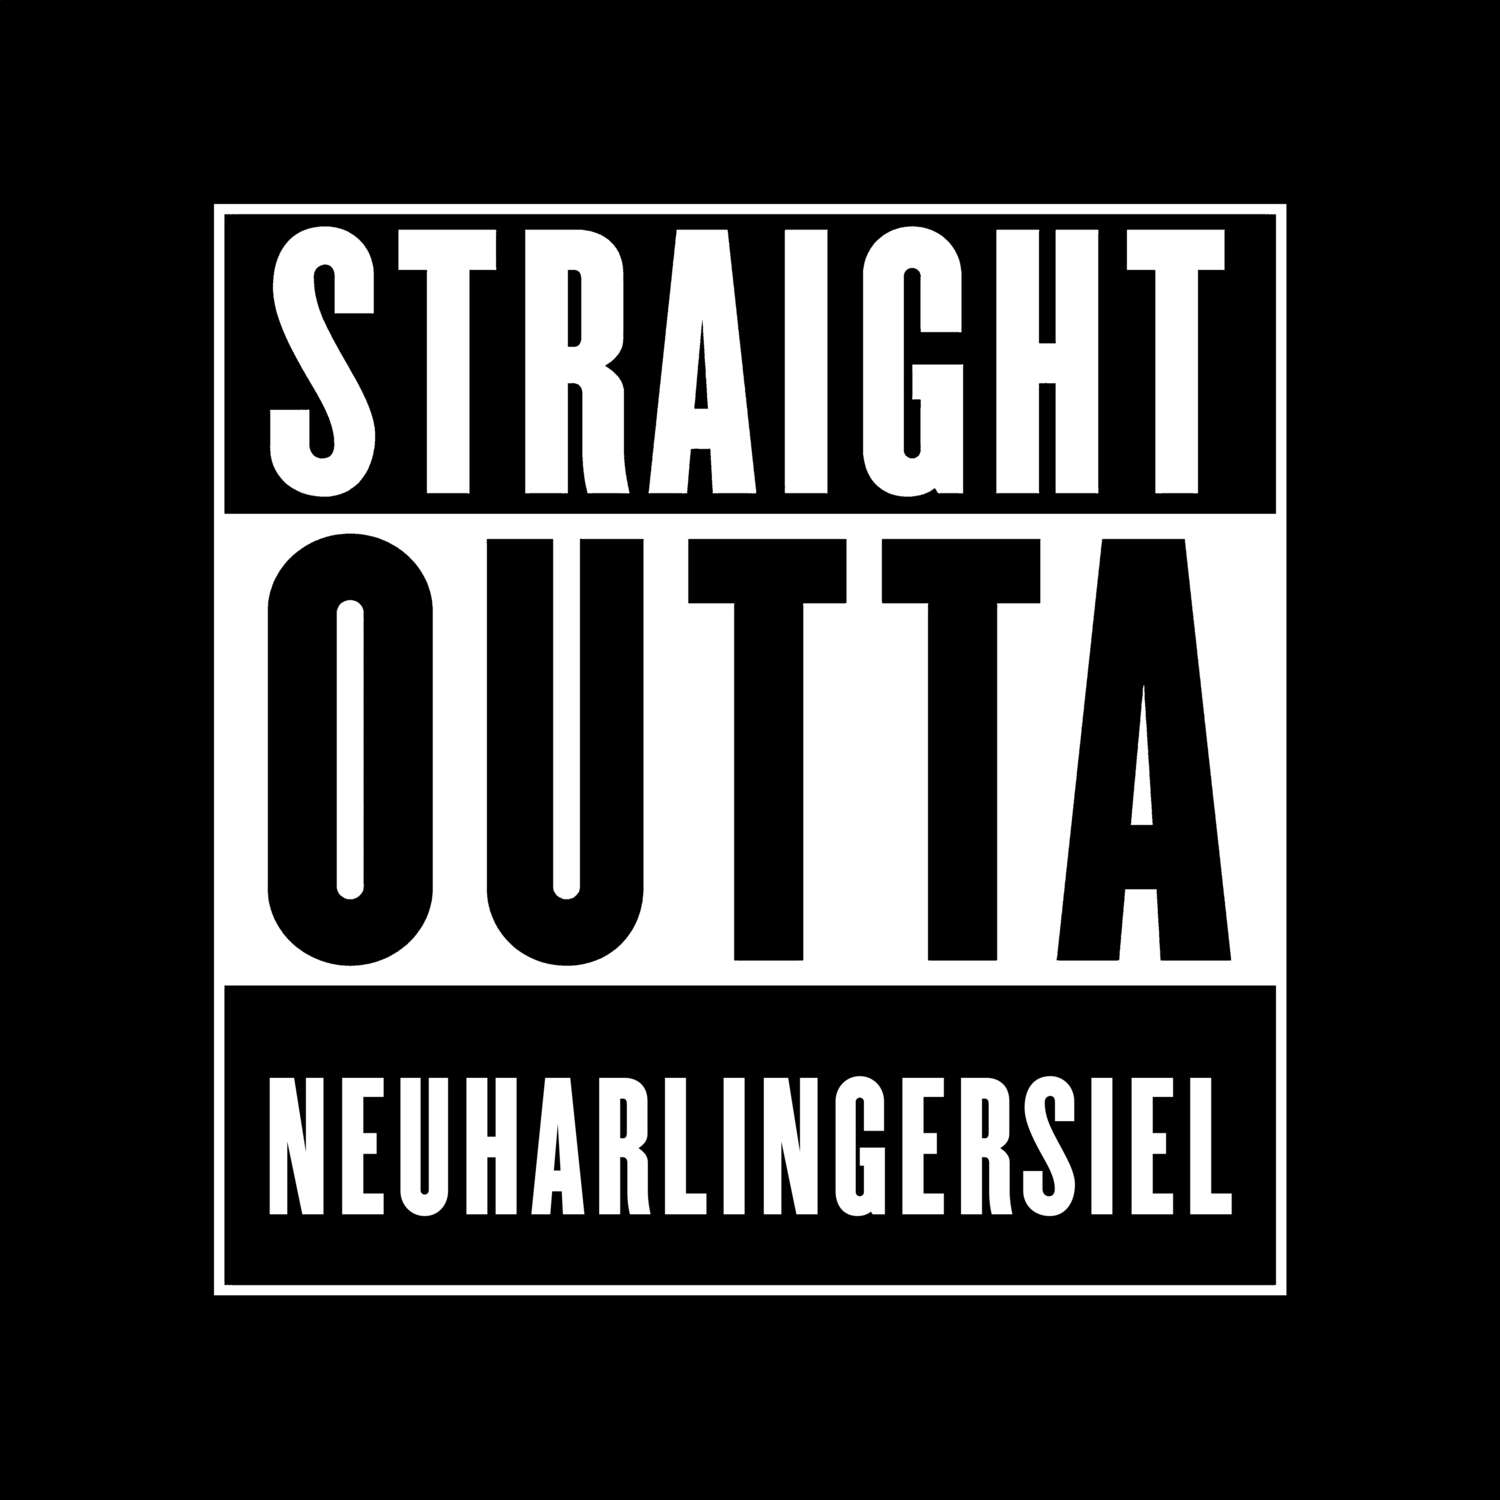 Neuharlingersiel T-Shirt »Straight Outta«